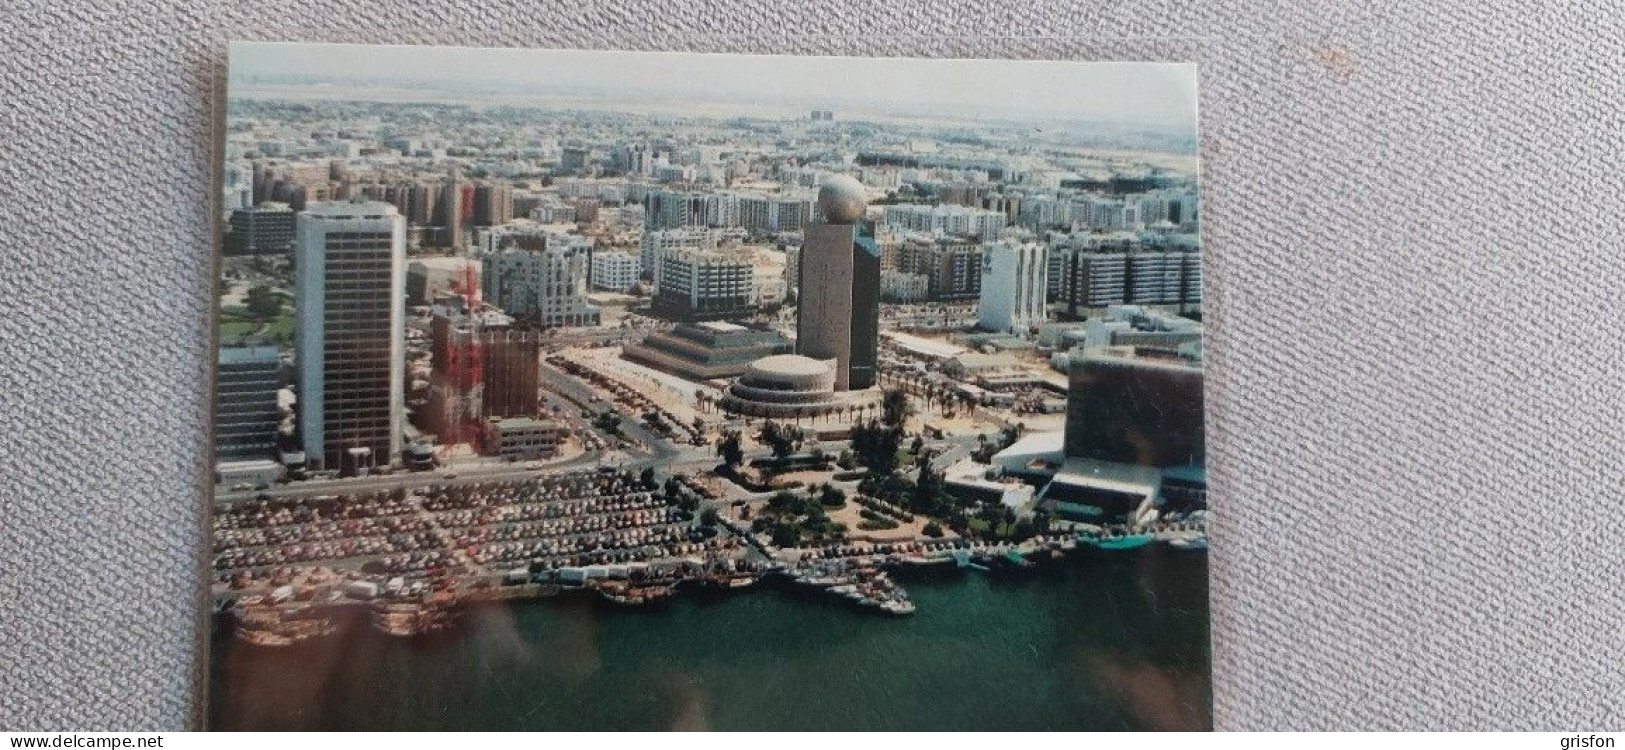 Abu Dhabi - Emiratos Arábes Unidos